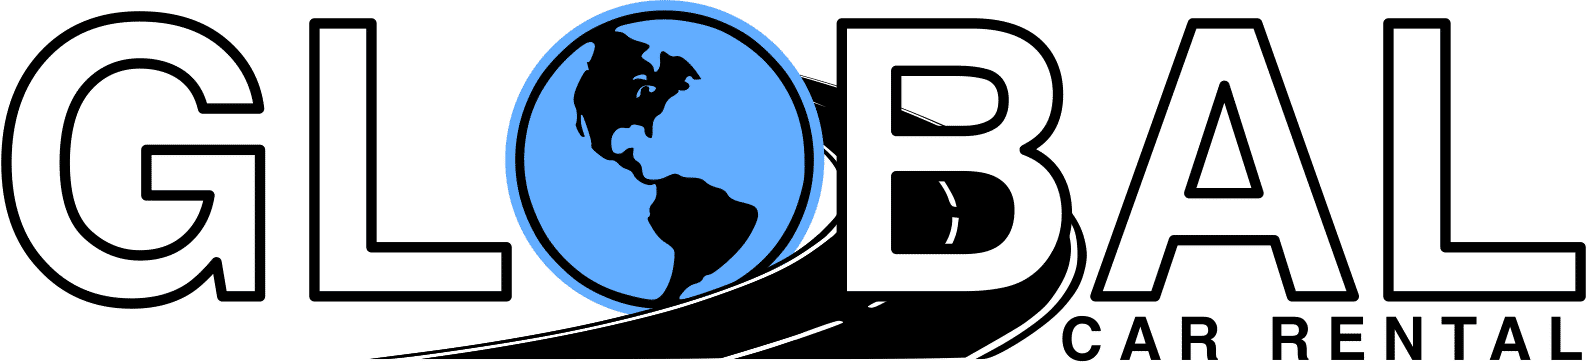 Global Car Rental Logo